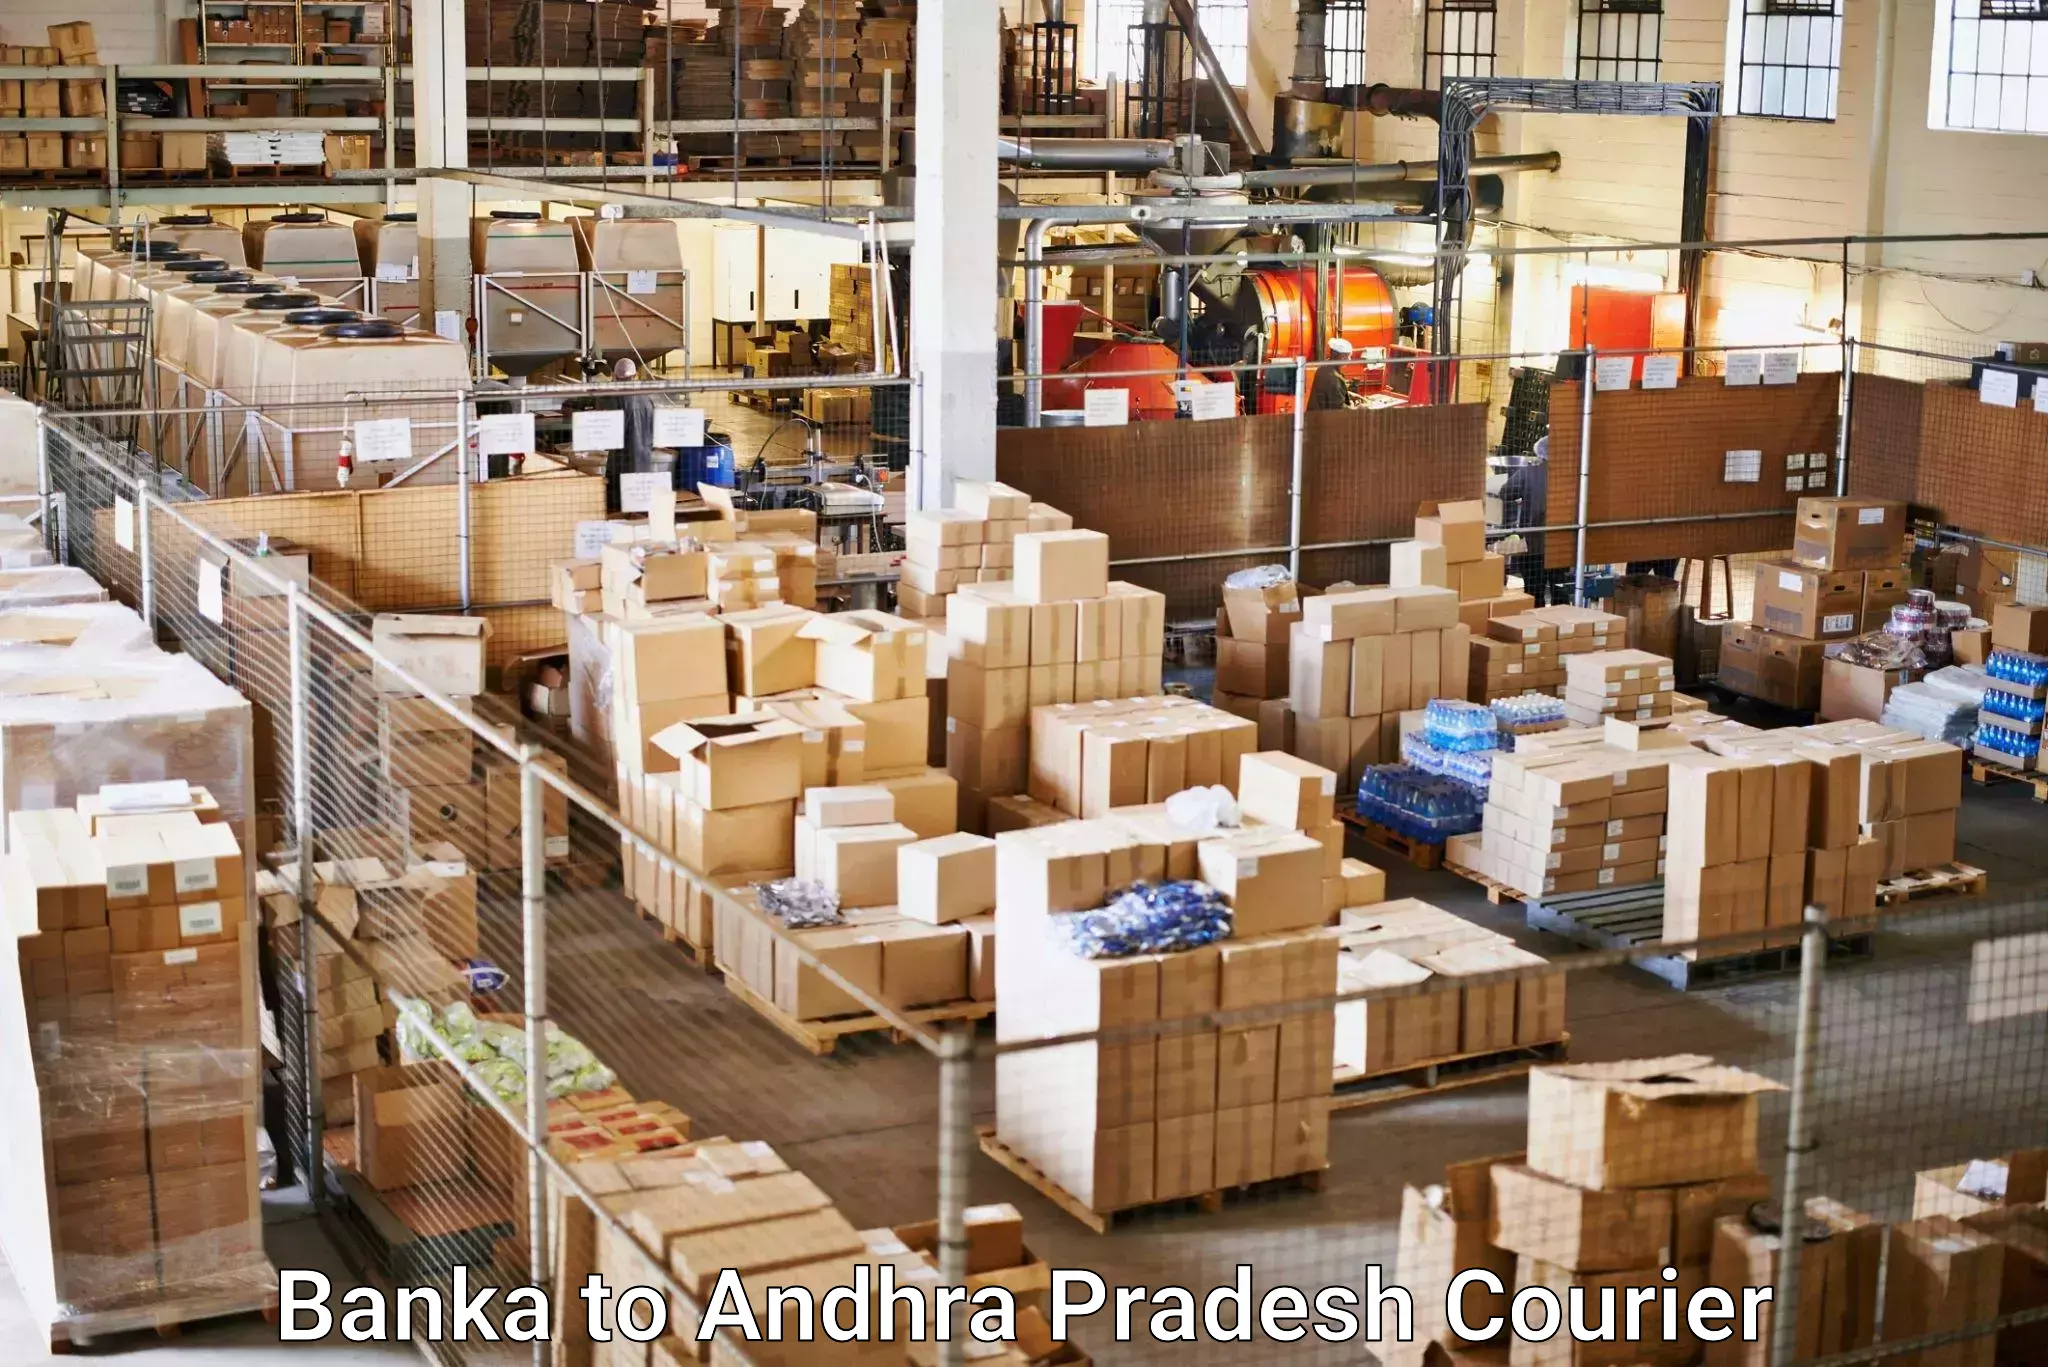 Global logistics network Banka to Andhra Pradesh